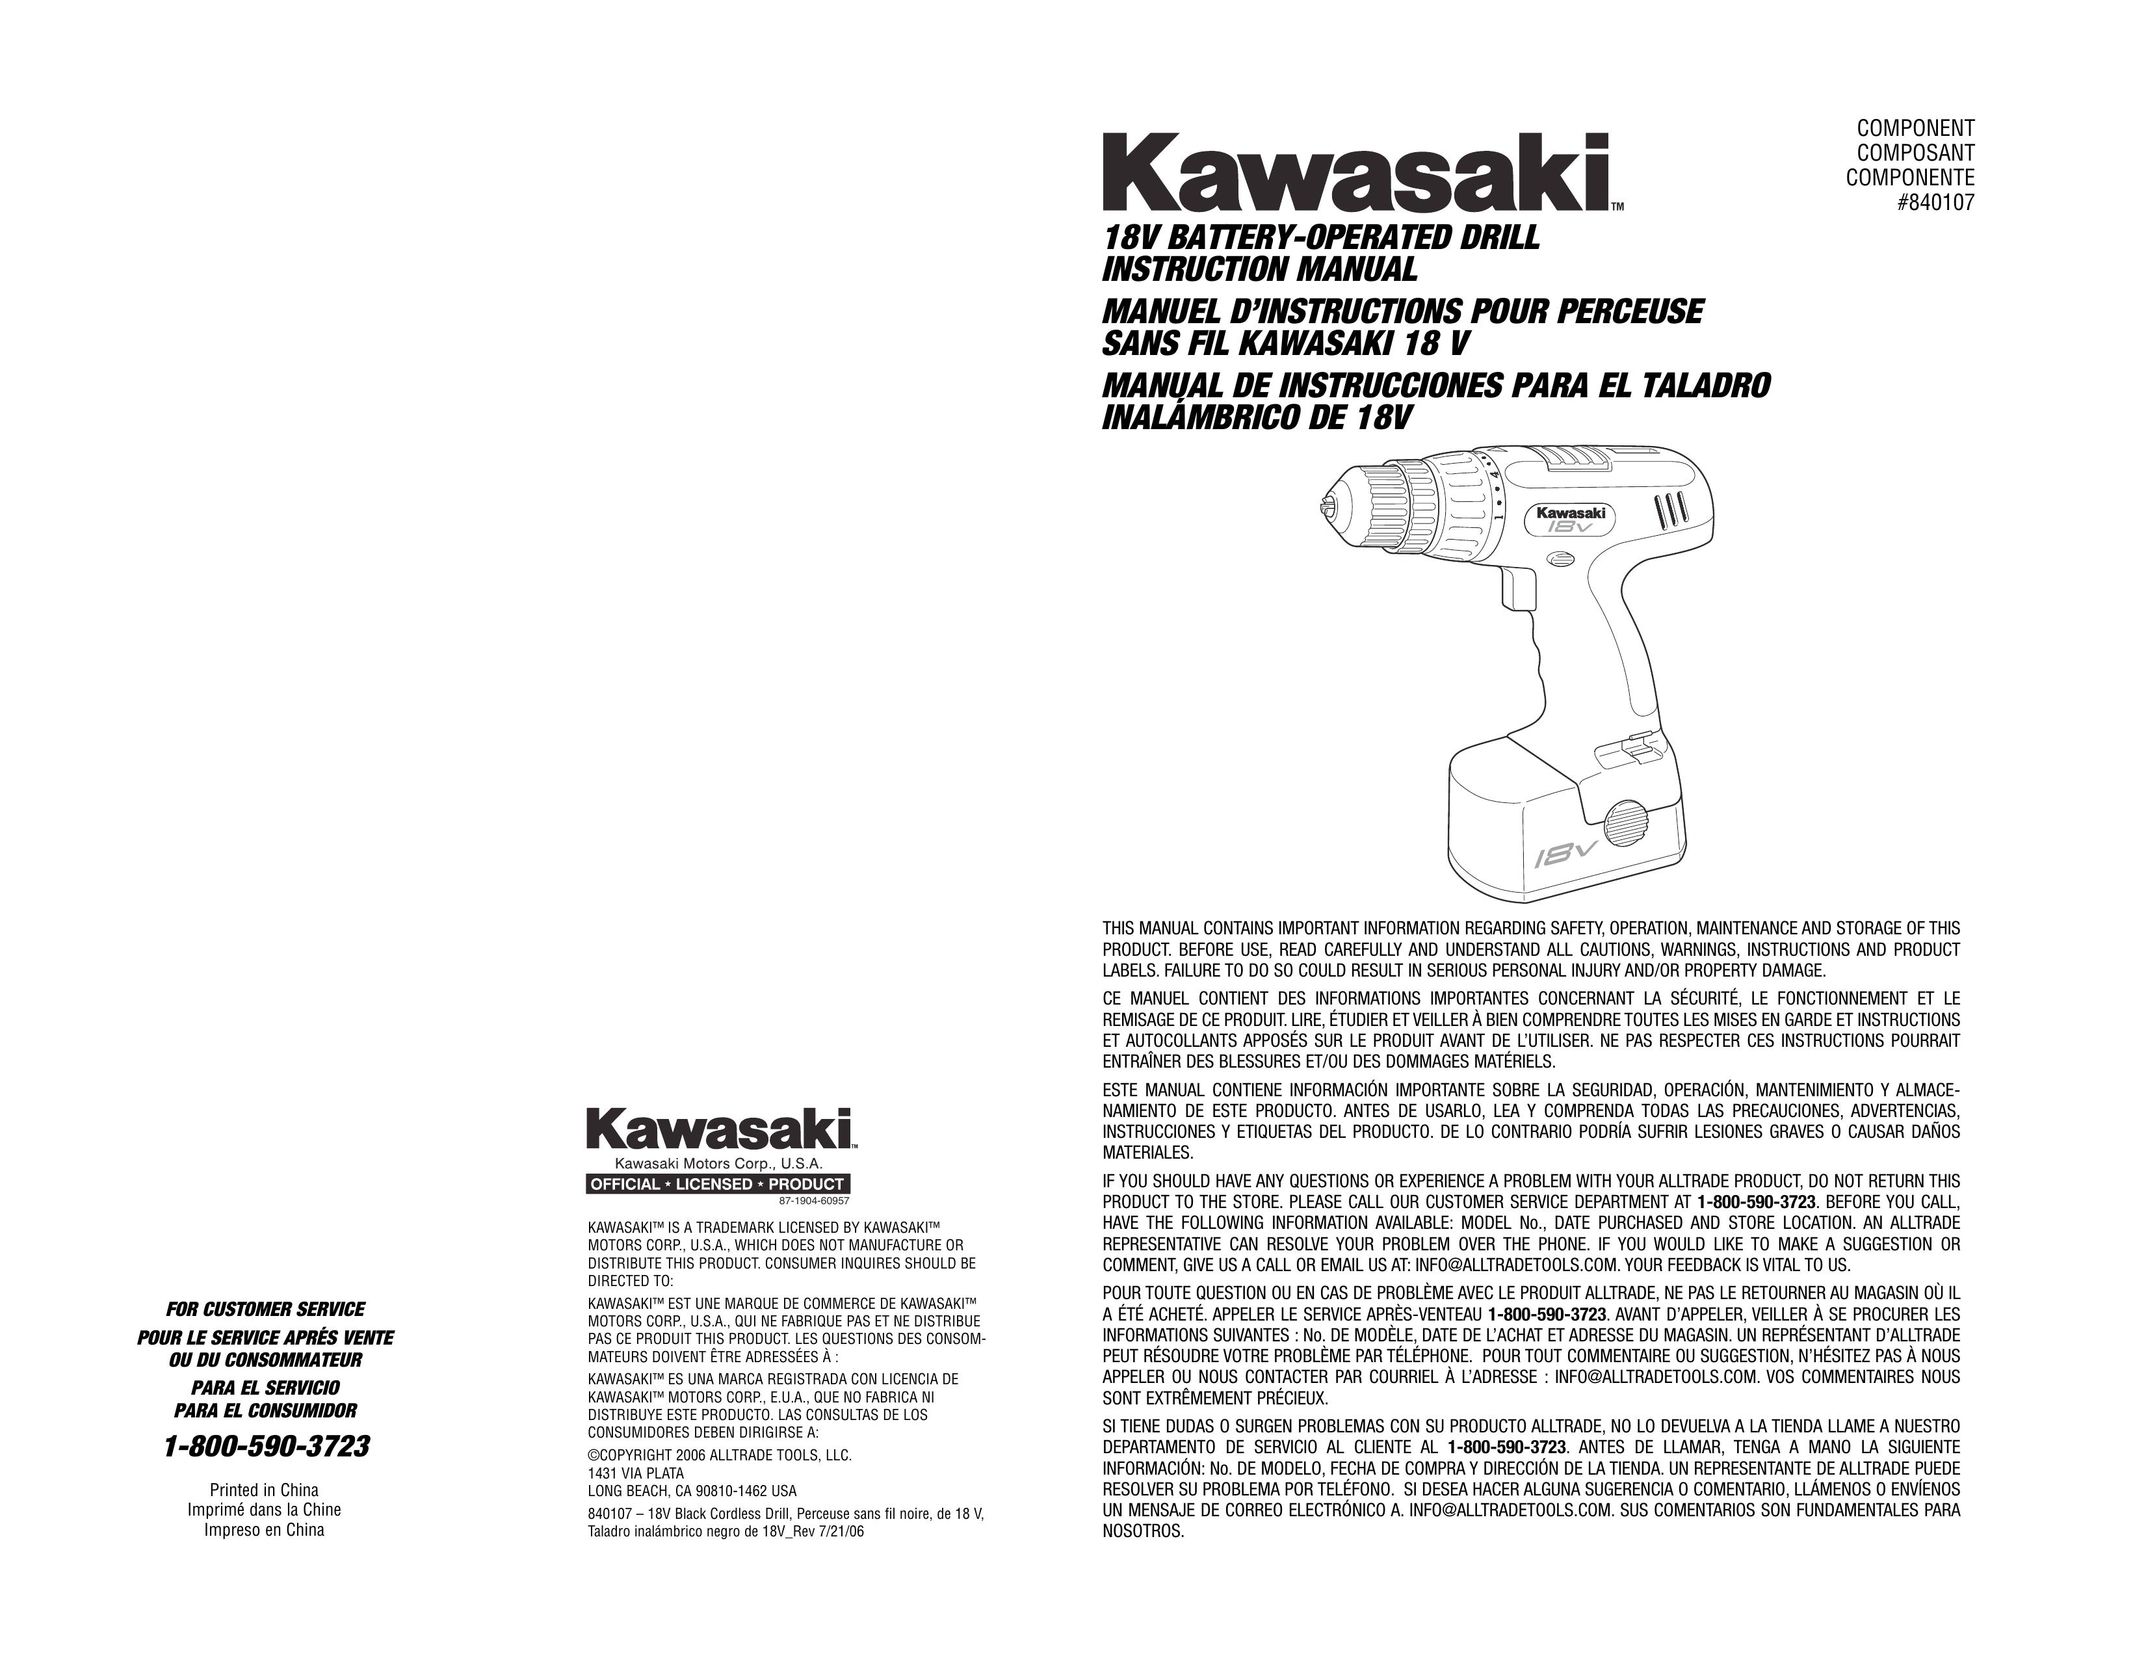 Kawasaki 840107 Drill User Manual